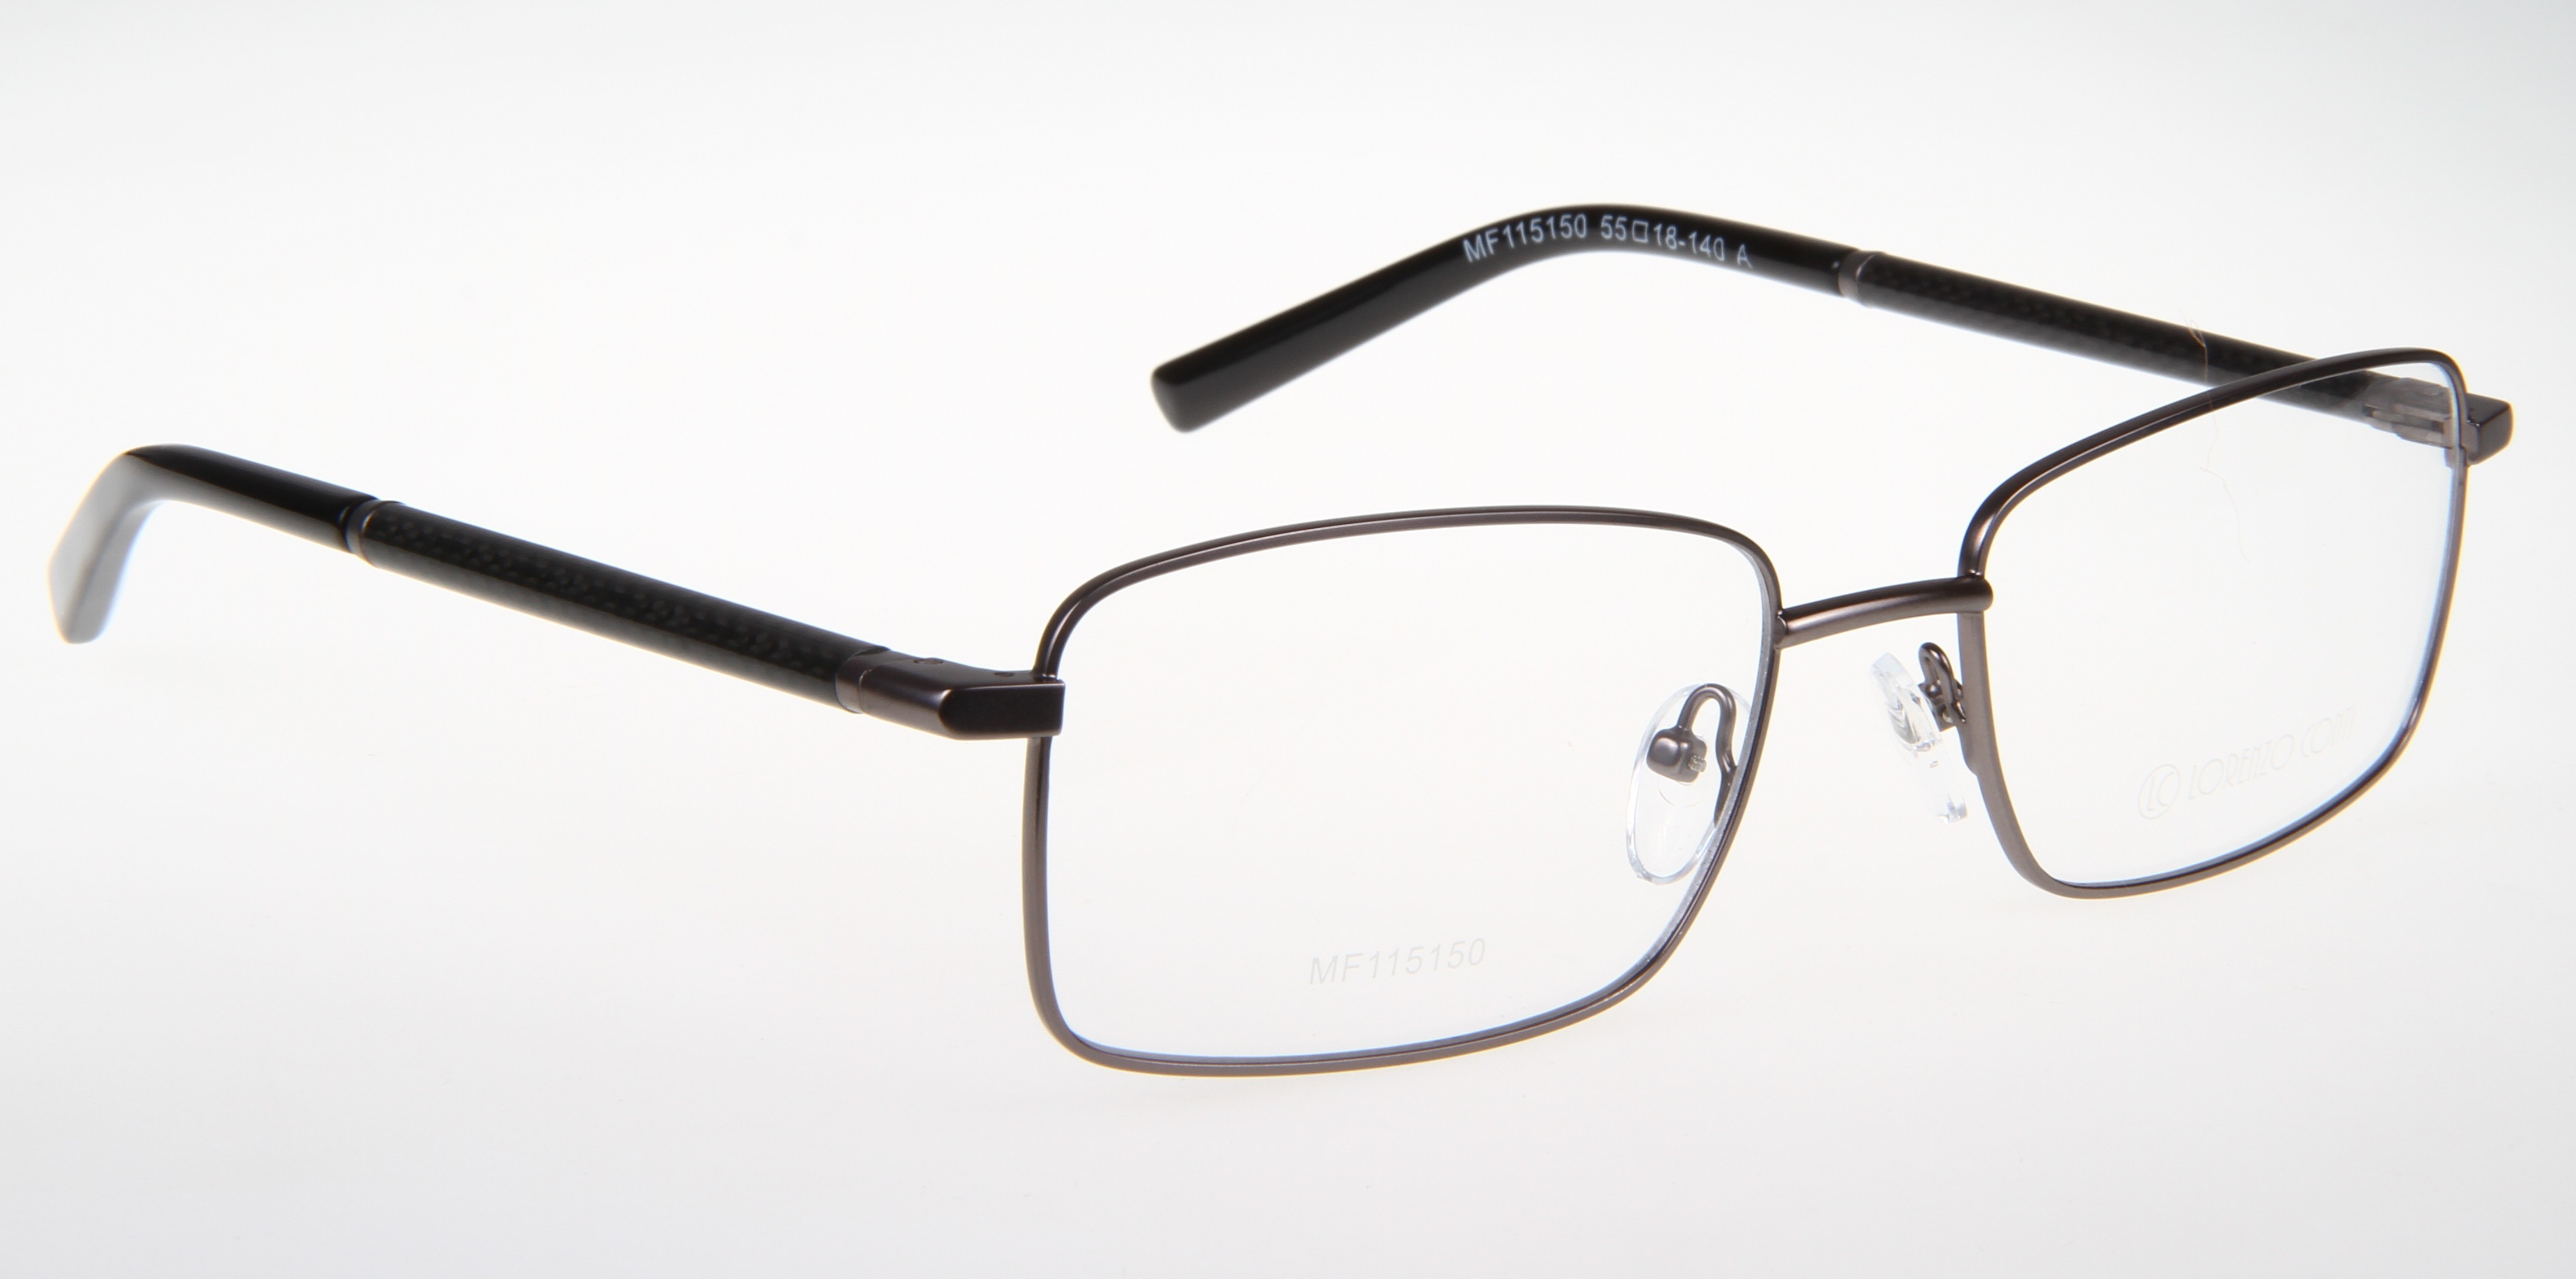 Oprawki okularowe Lorenzo MF115150 col. A srebrny